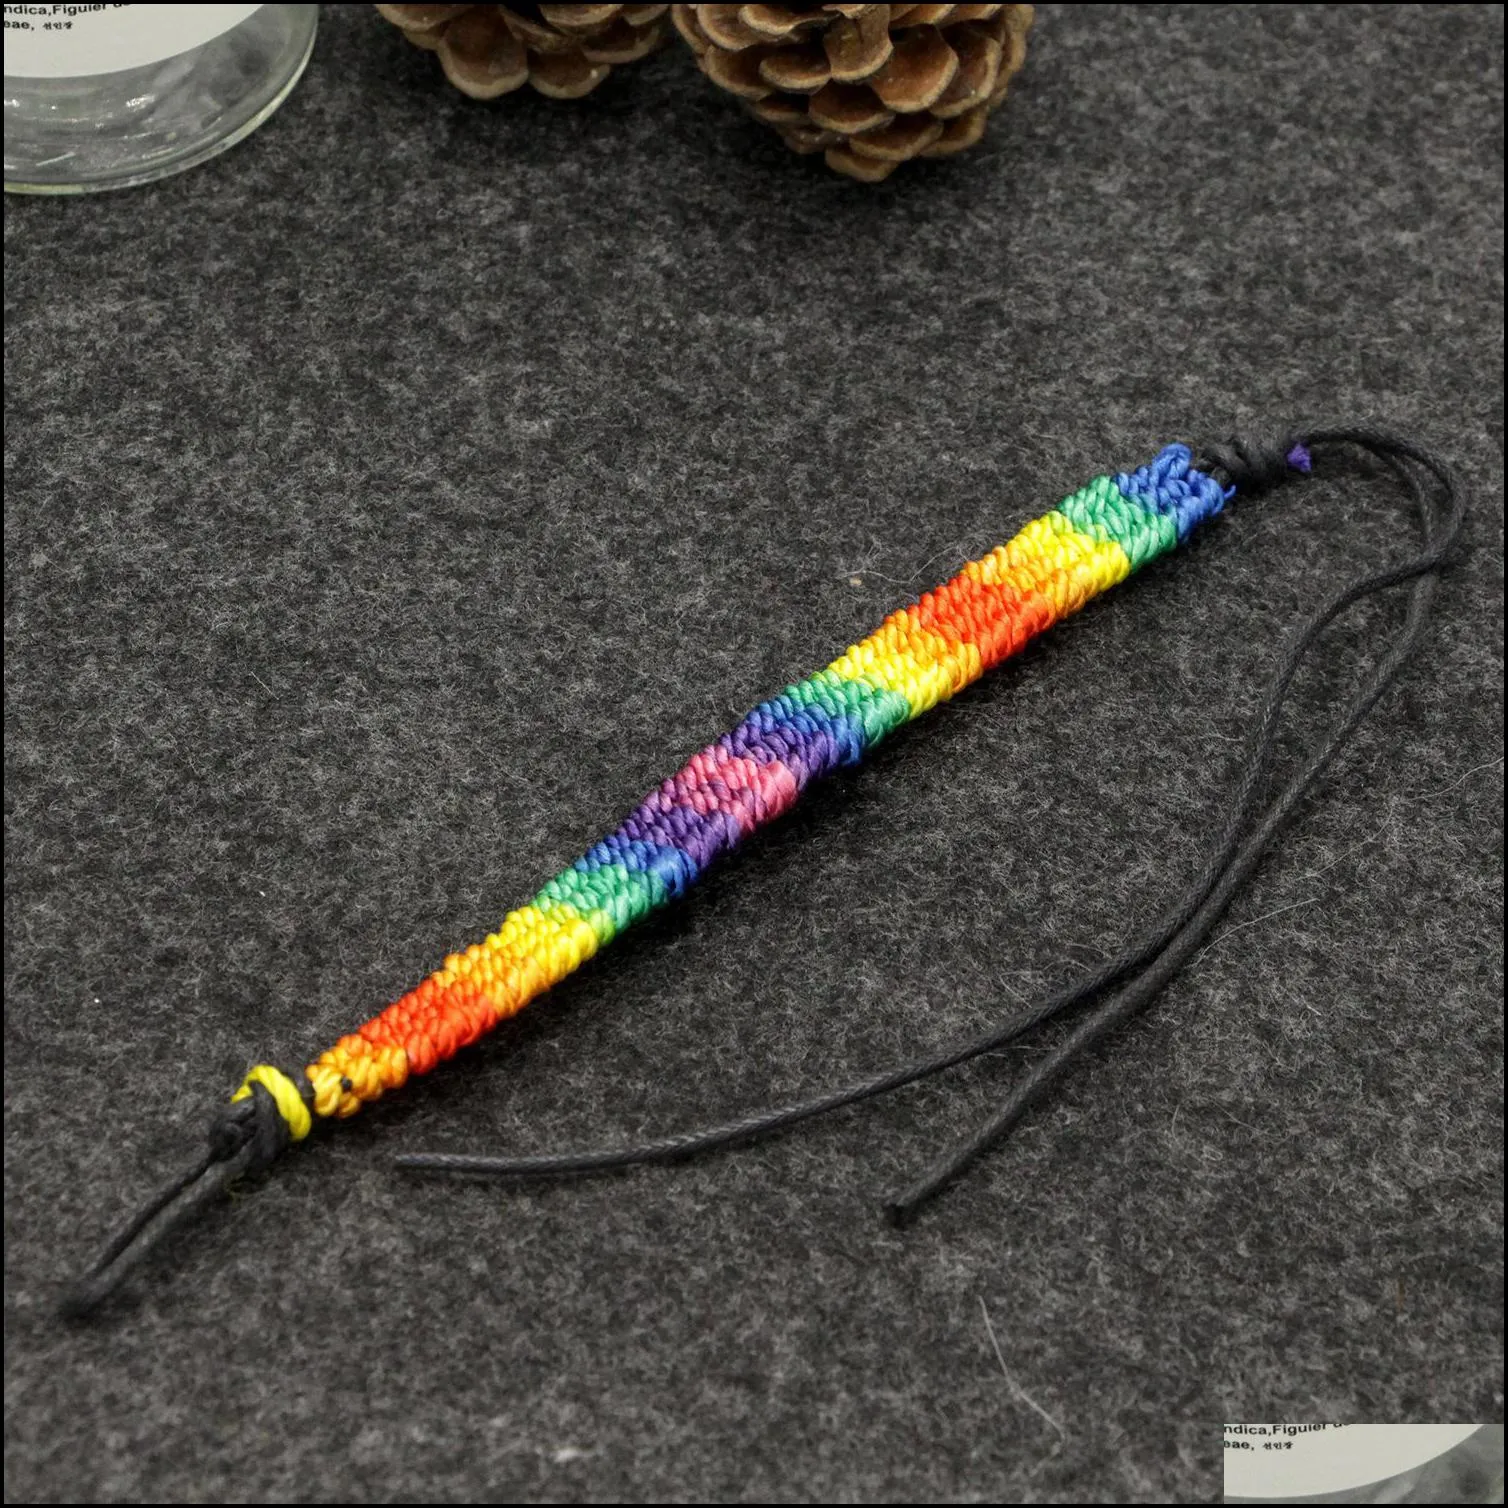 Kimter Charm Lesbian Valentine`s Gifts LGBT Flag Braid Handmade Rainbow Gay Pride Bracelet Love Delicate Friendship Bracelets M094FA